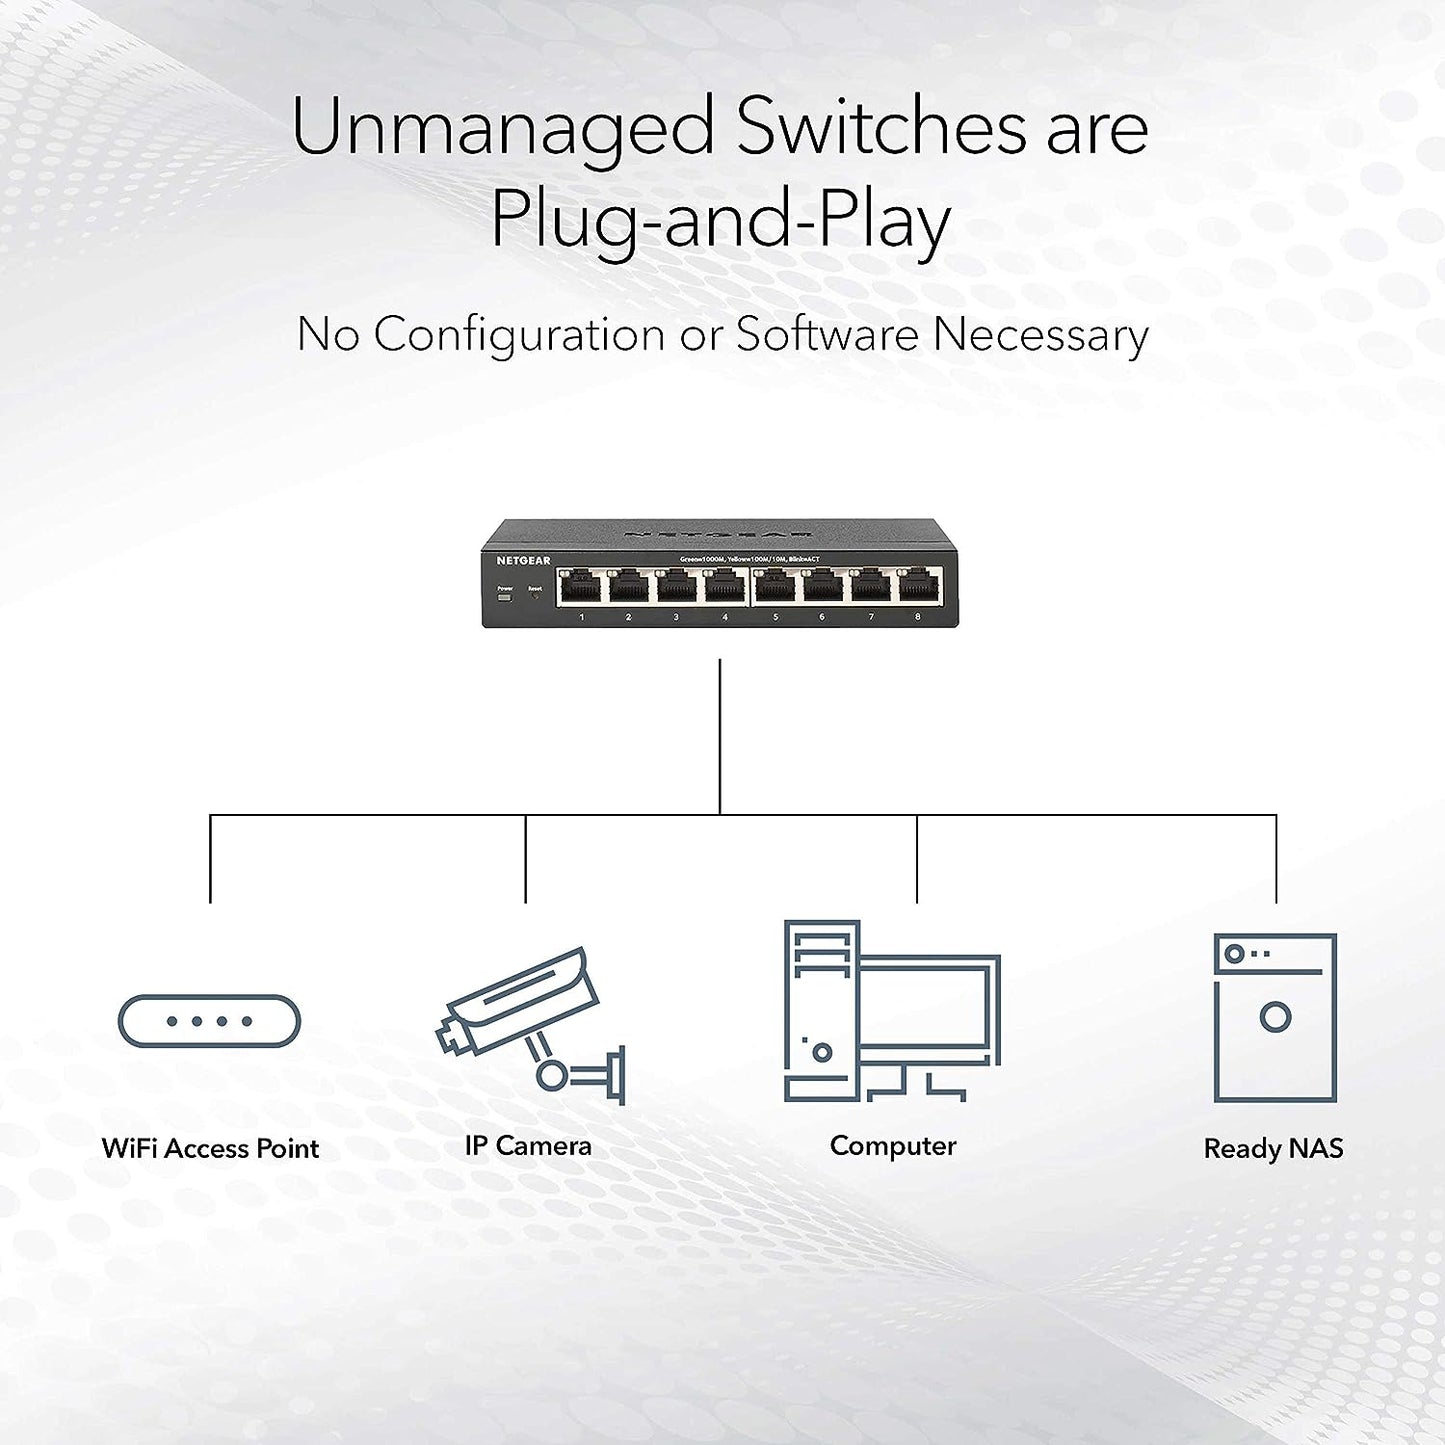 Netgear GS108 8 Port ProSafe Gigabit Ethernet Switch